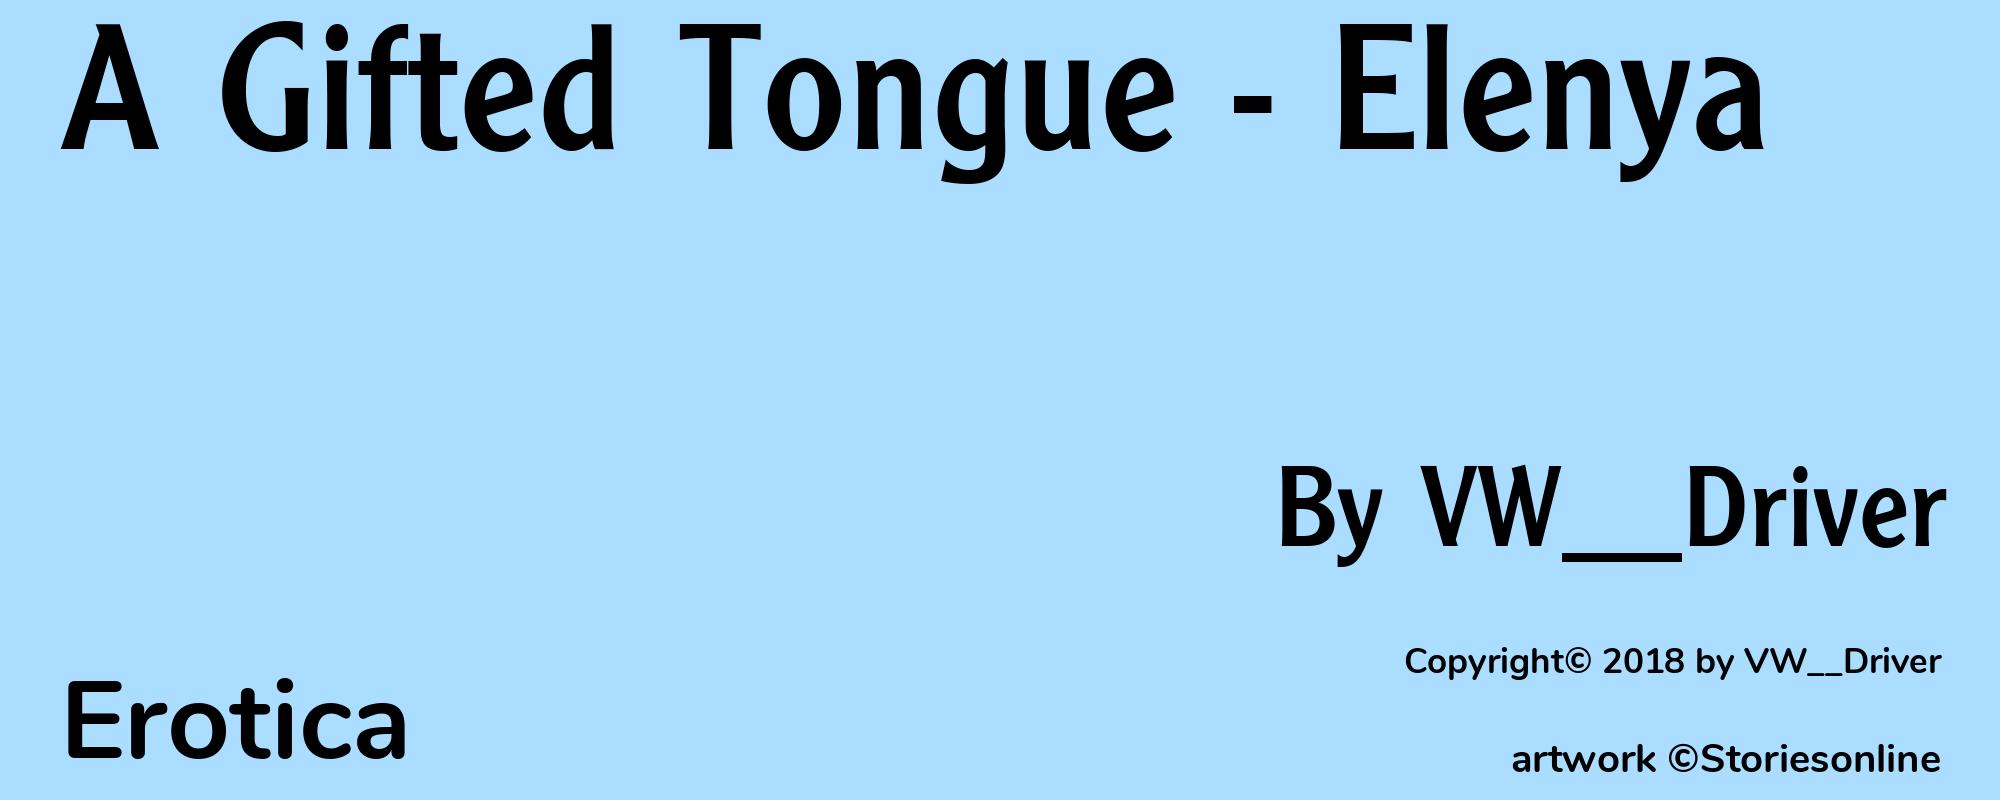 A Gifted Tongue - Elenya - Cover